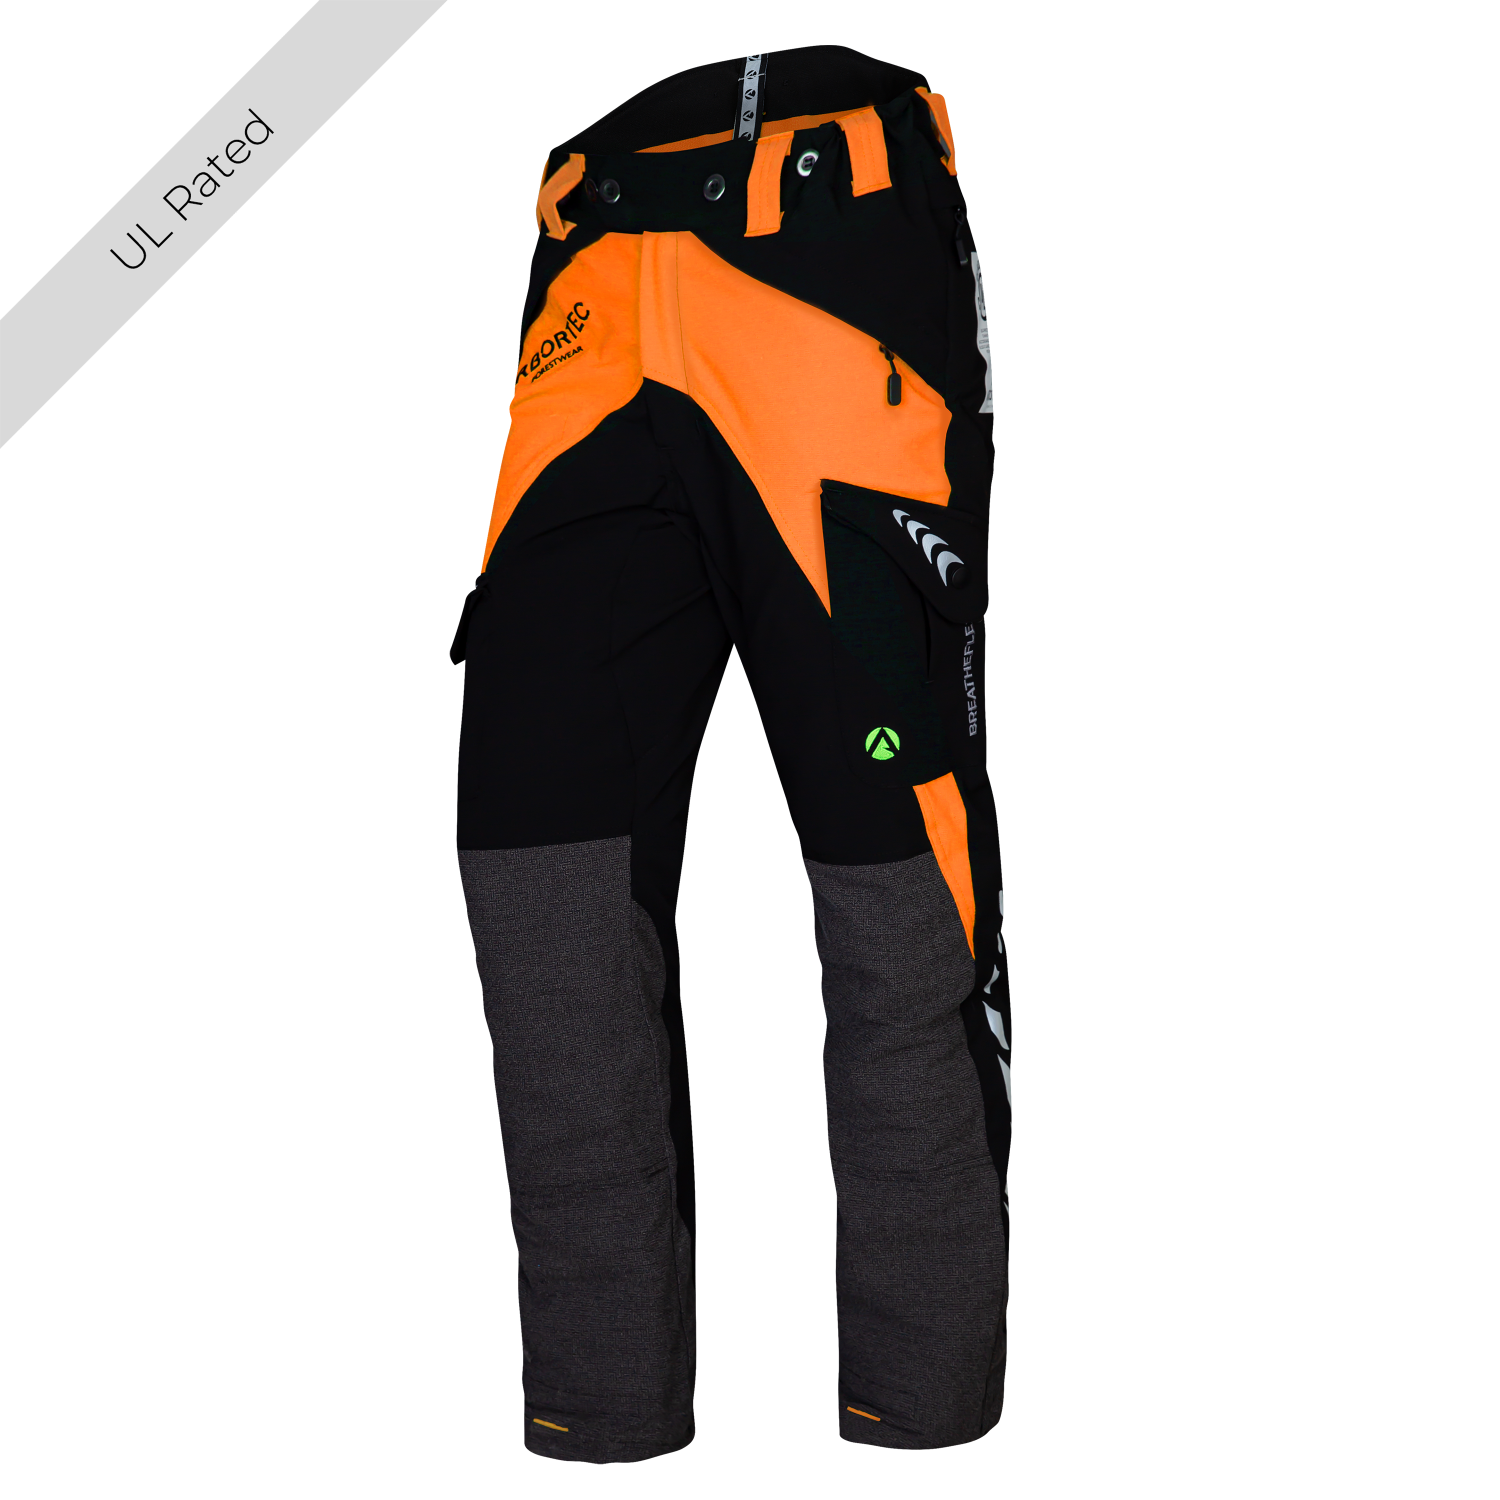 AT4010(US) Trouser Breatheflex US Orange/Black